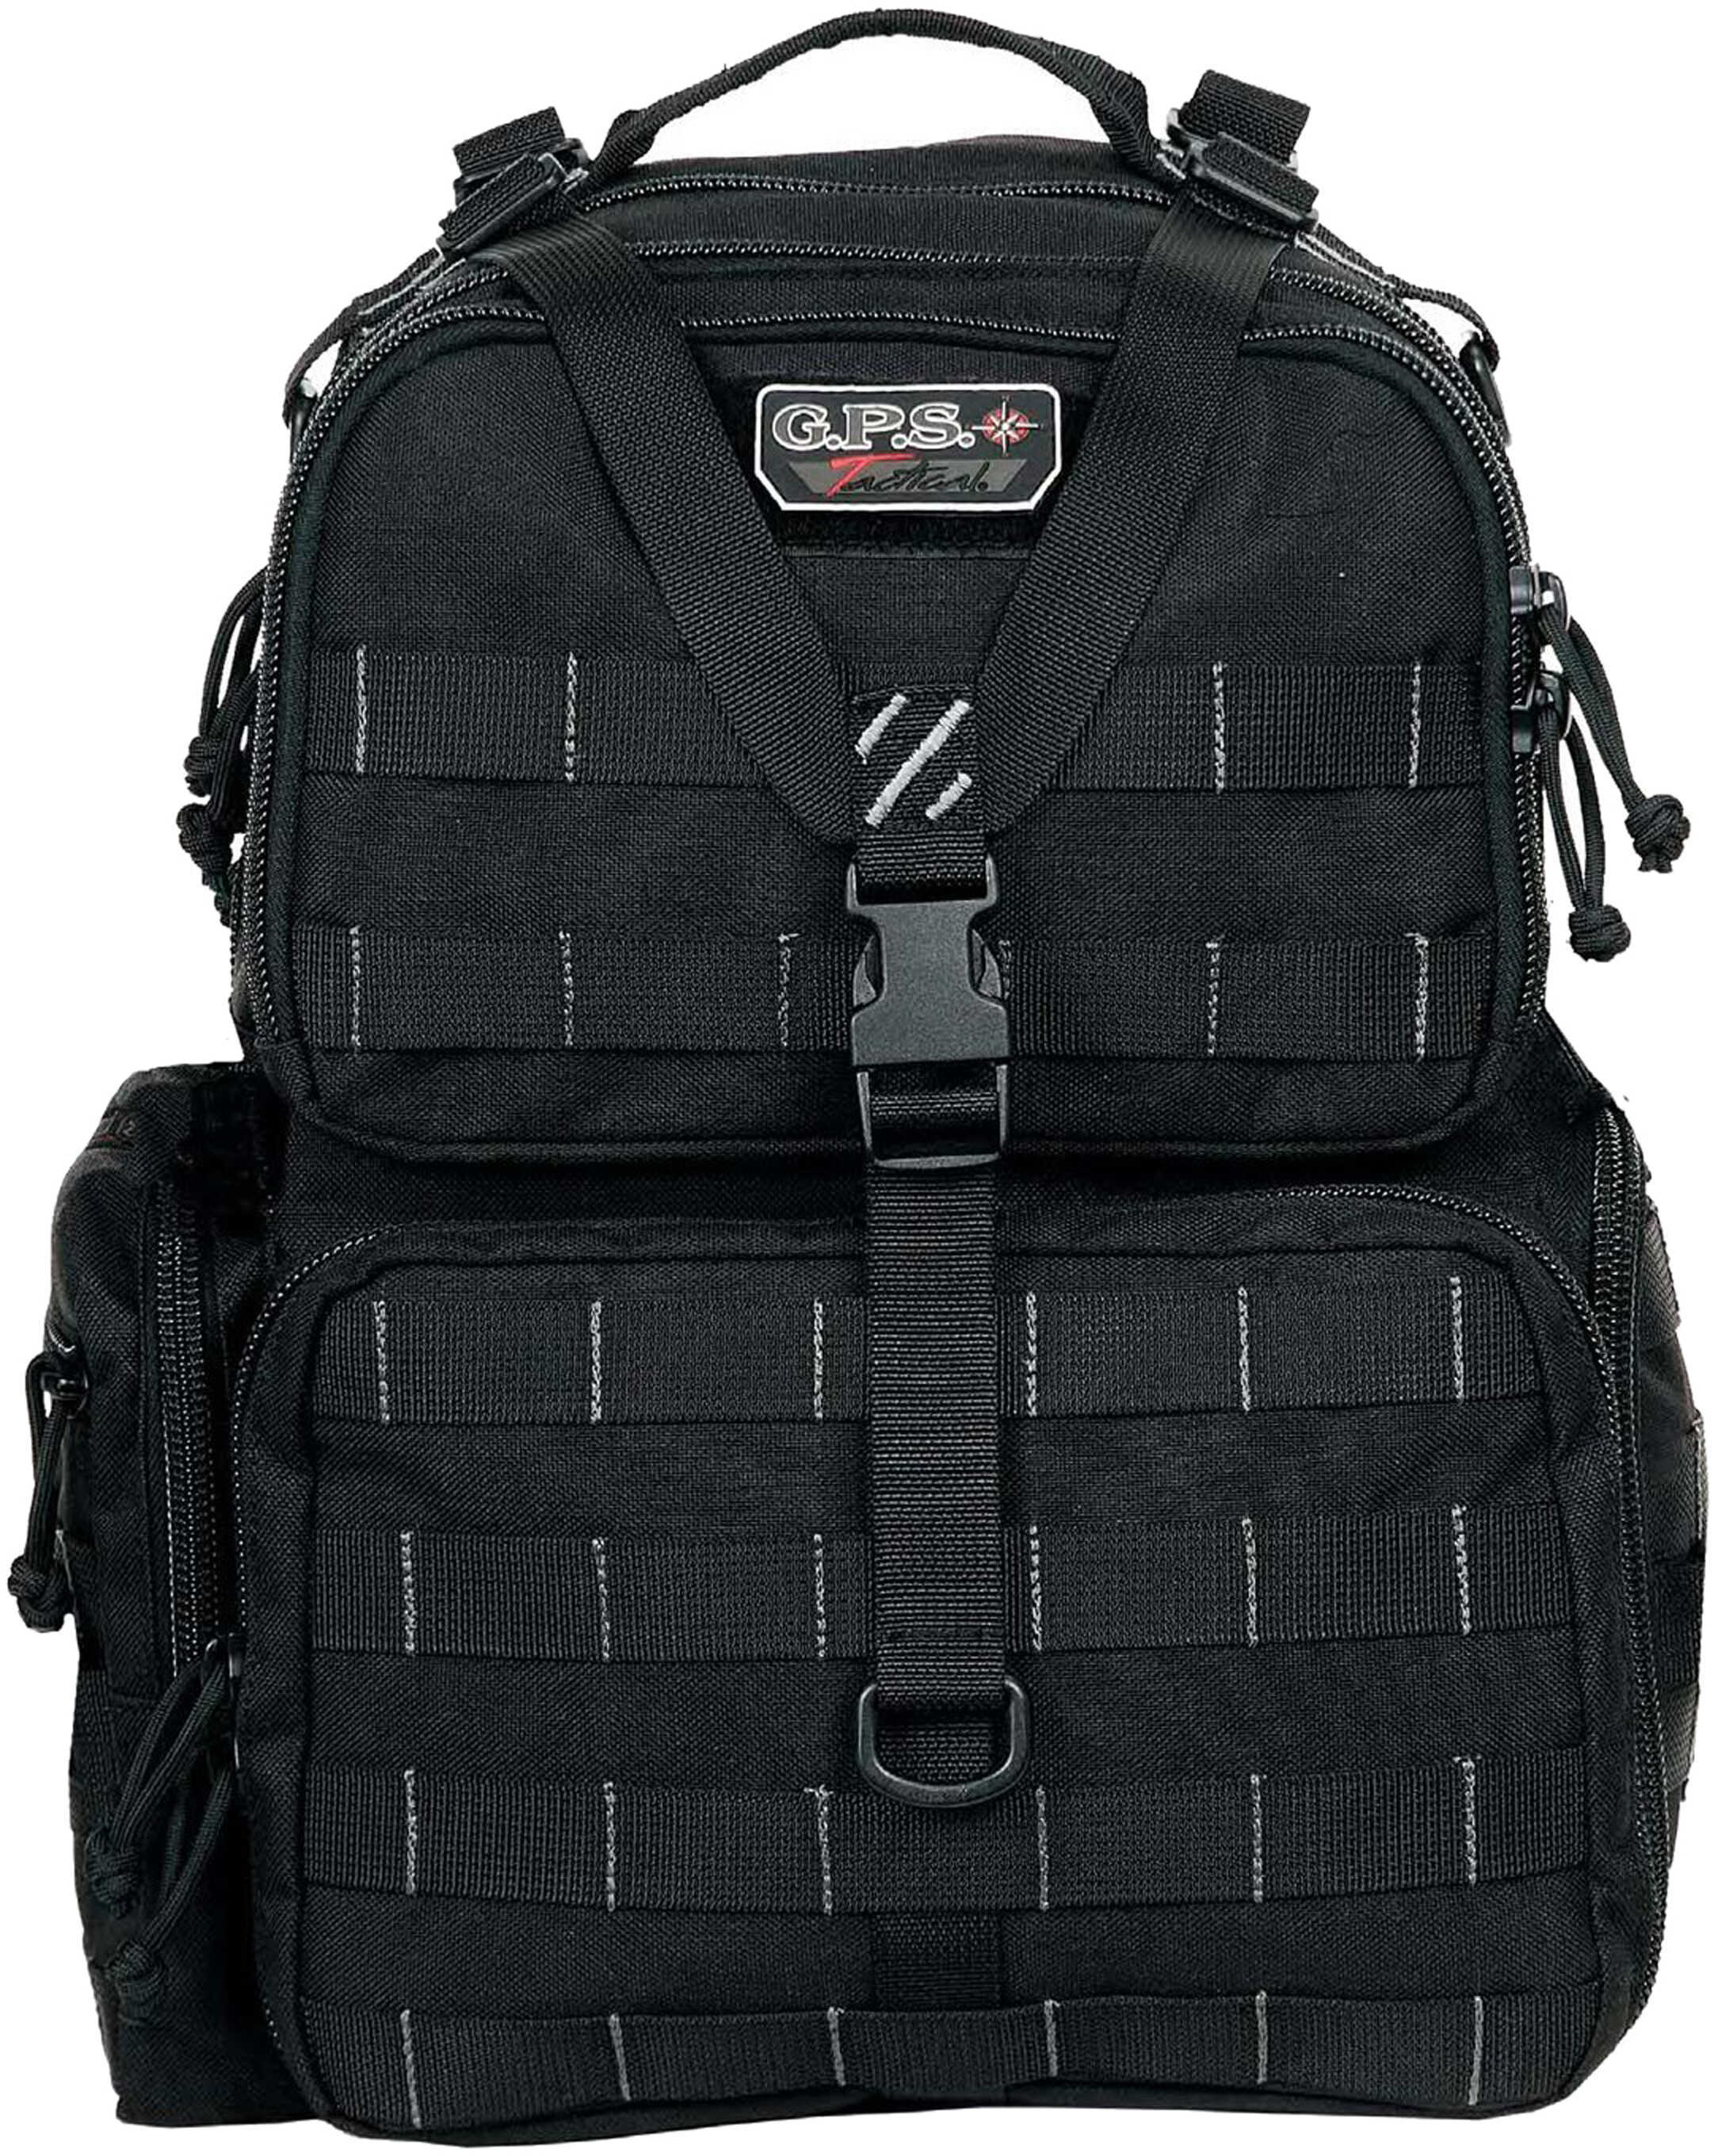 G-Outdoors GPS Tactical Range Backpack Holds 3 Handguns - Black